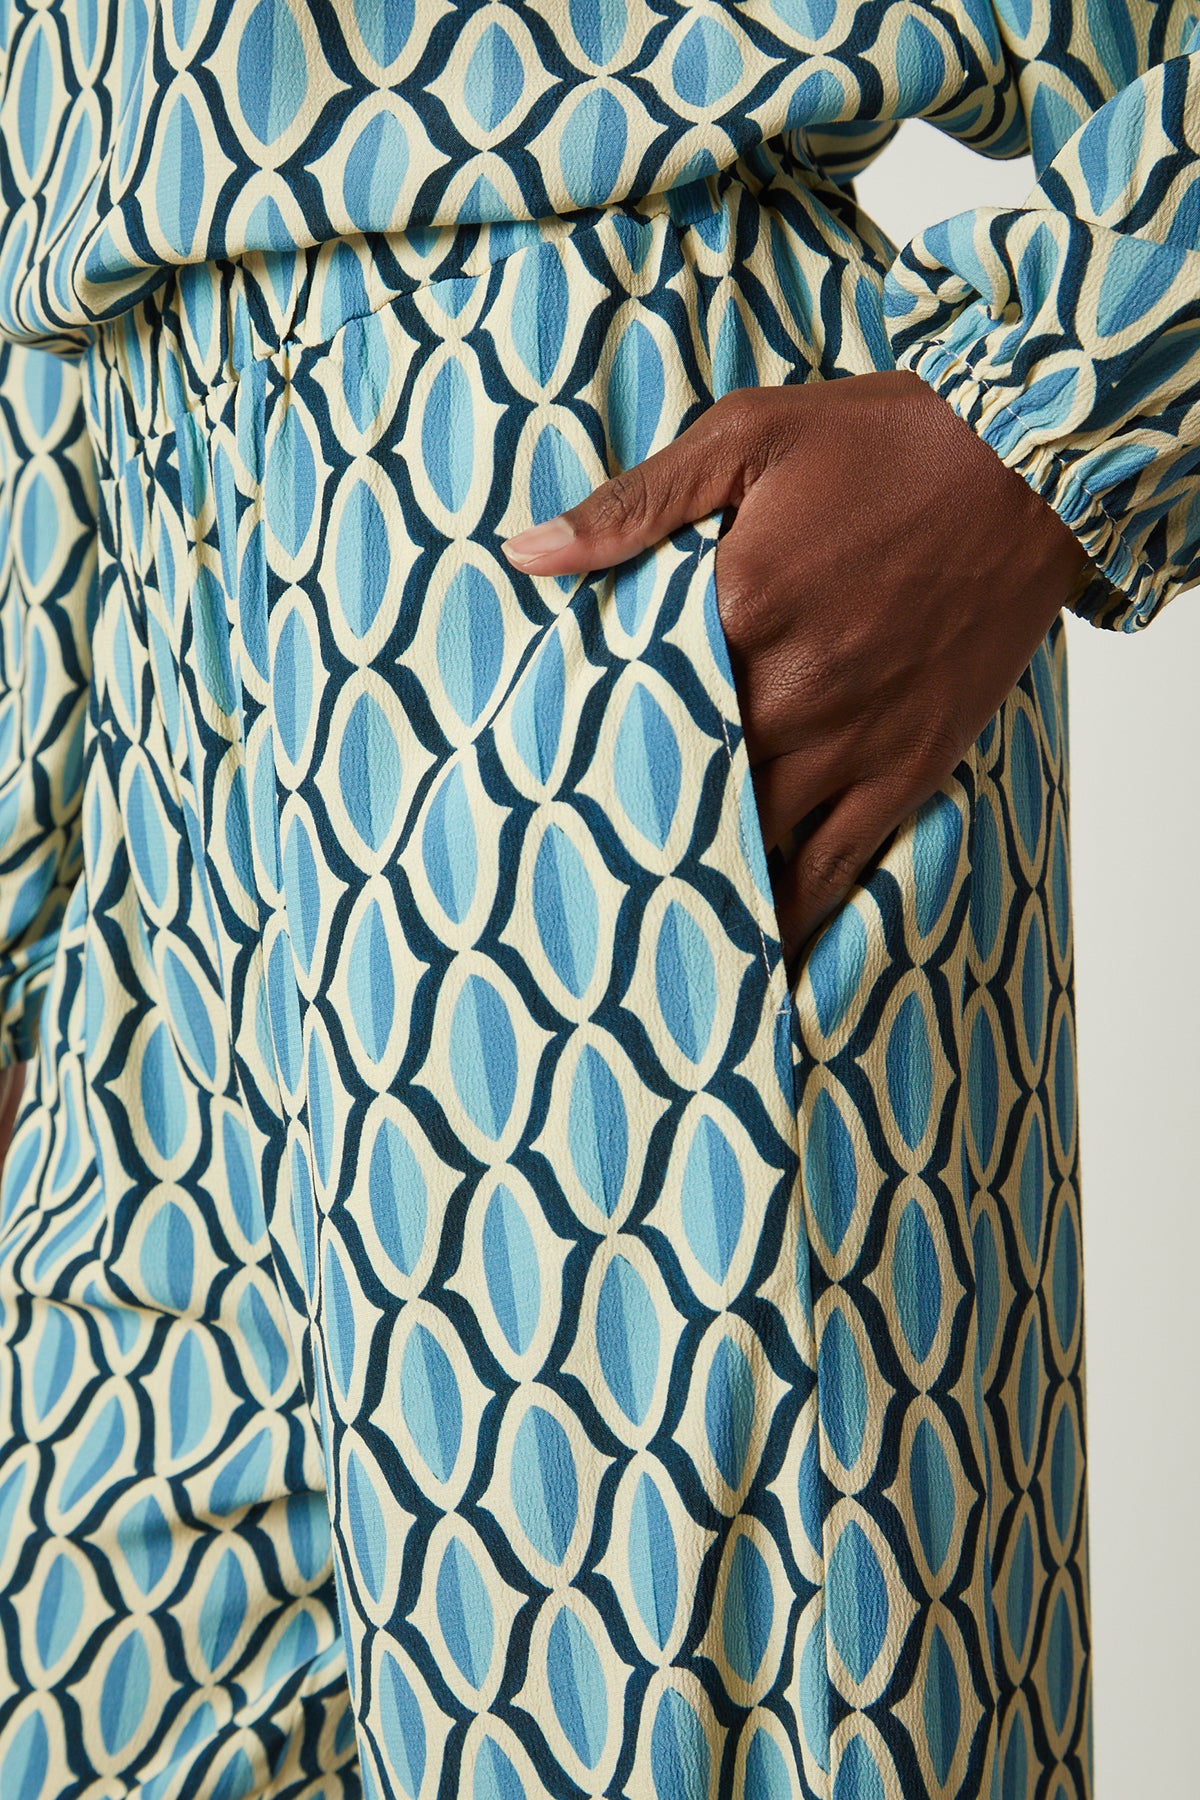   Eliza pant in blue geometric print crepe close up pocket detail 